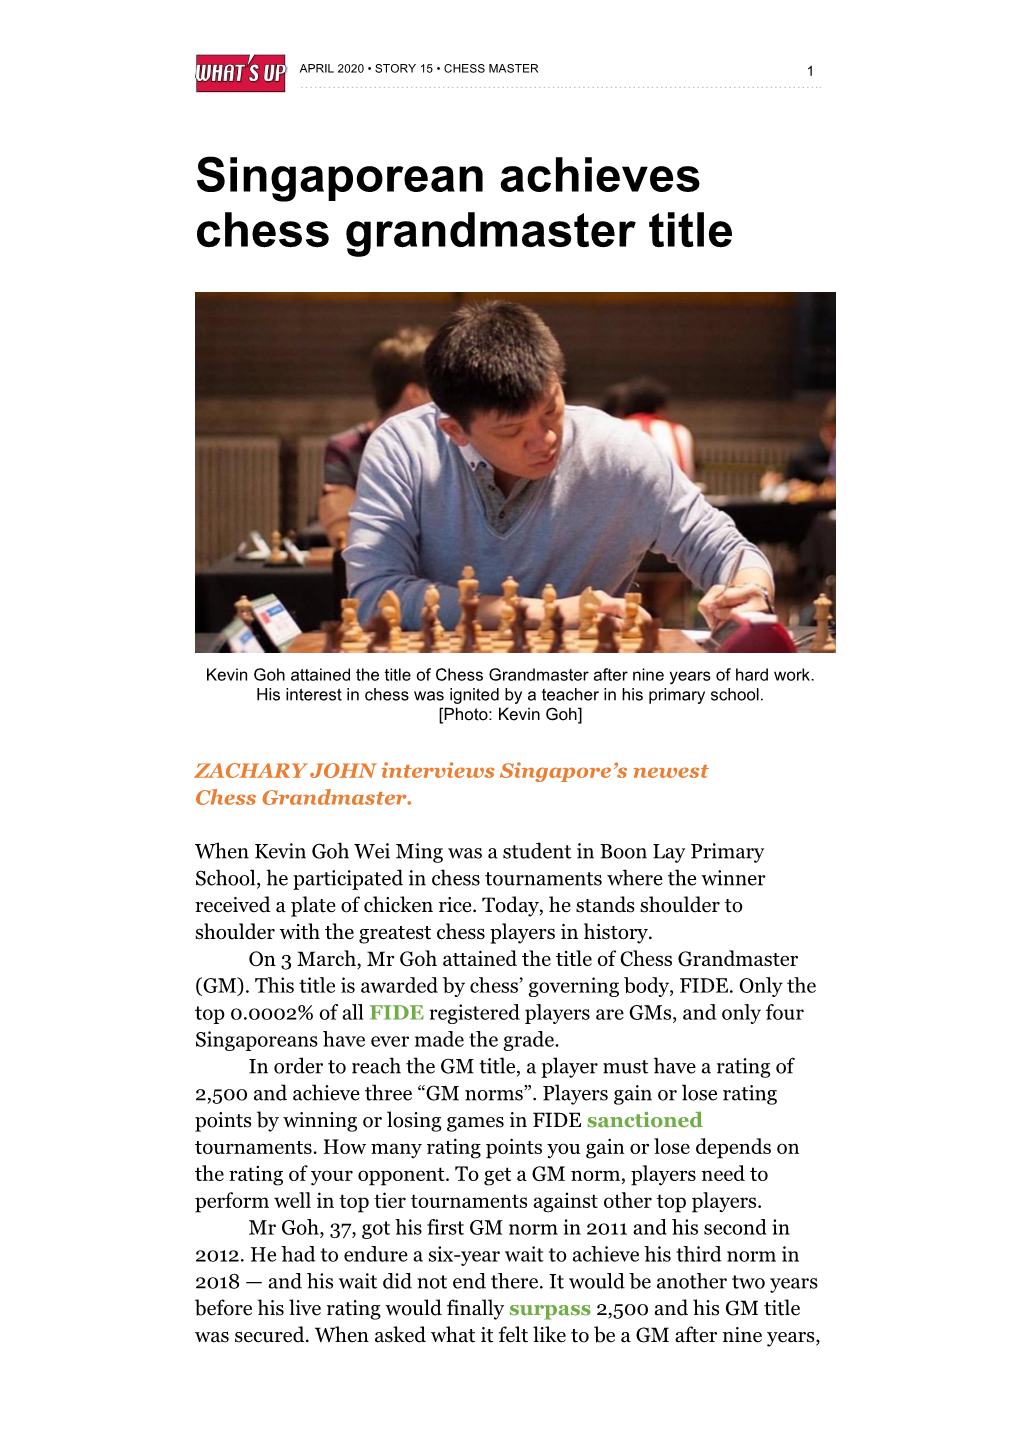 Singaporean Achieves Chess Grandmaster Title